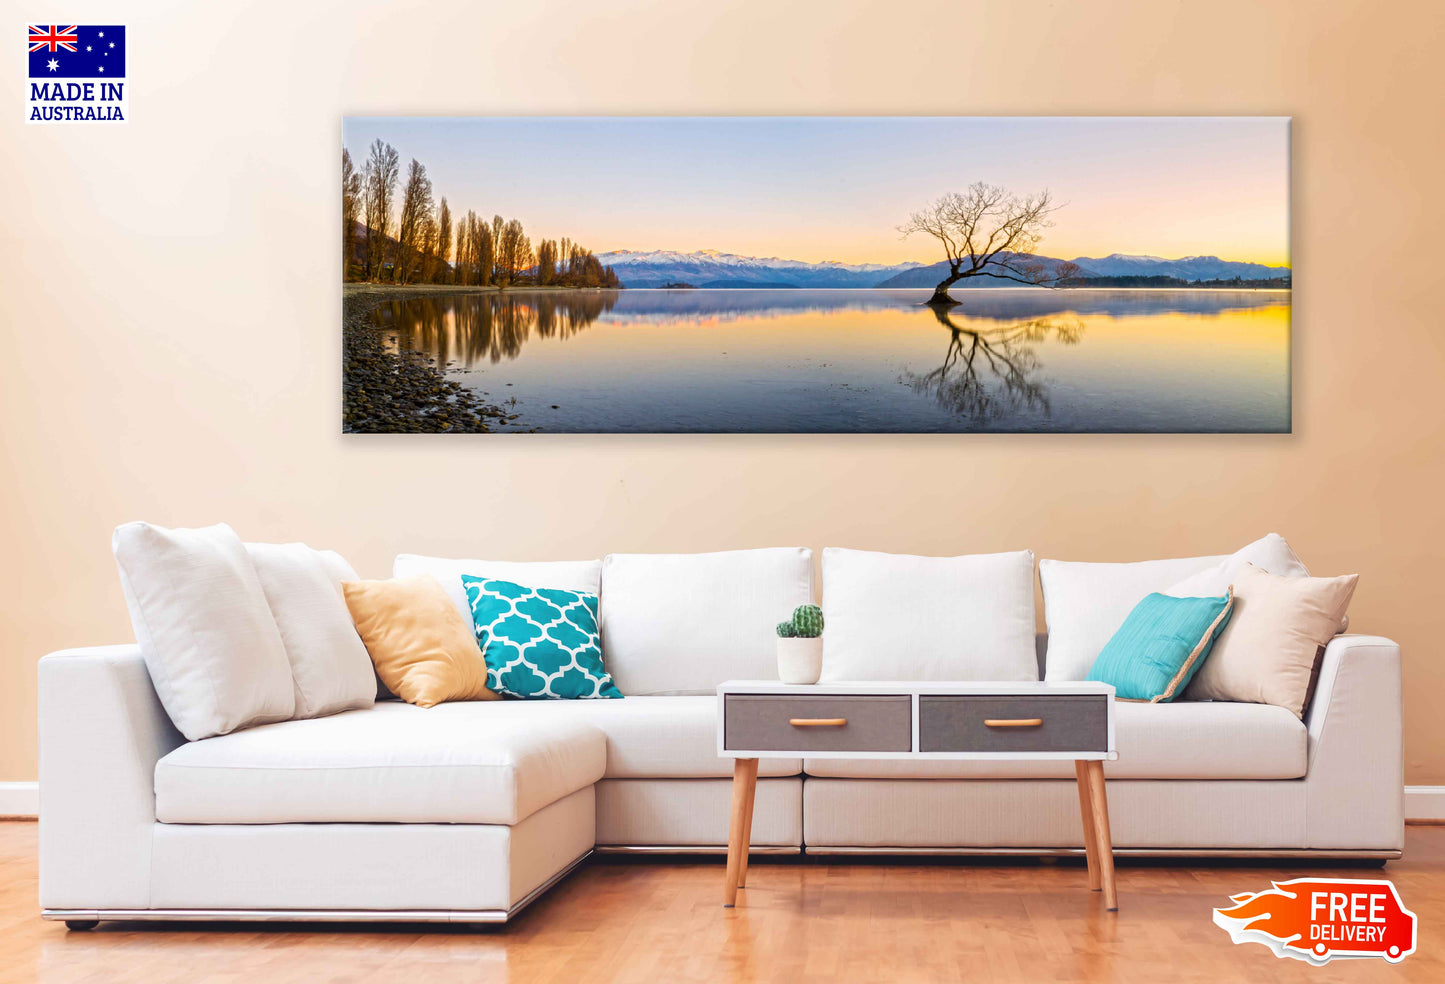 Panoramic Canvas Wanaka Tree on Lake Scenery Photograph High Quality 100% Australian Made Wall Canvas Print Ready to Hang